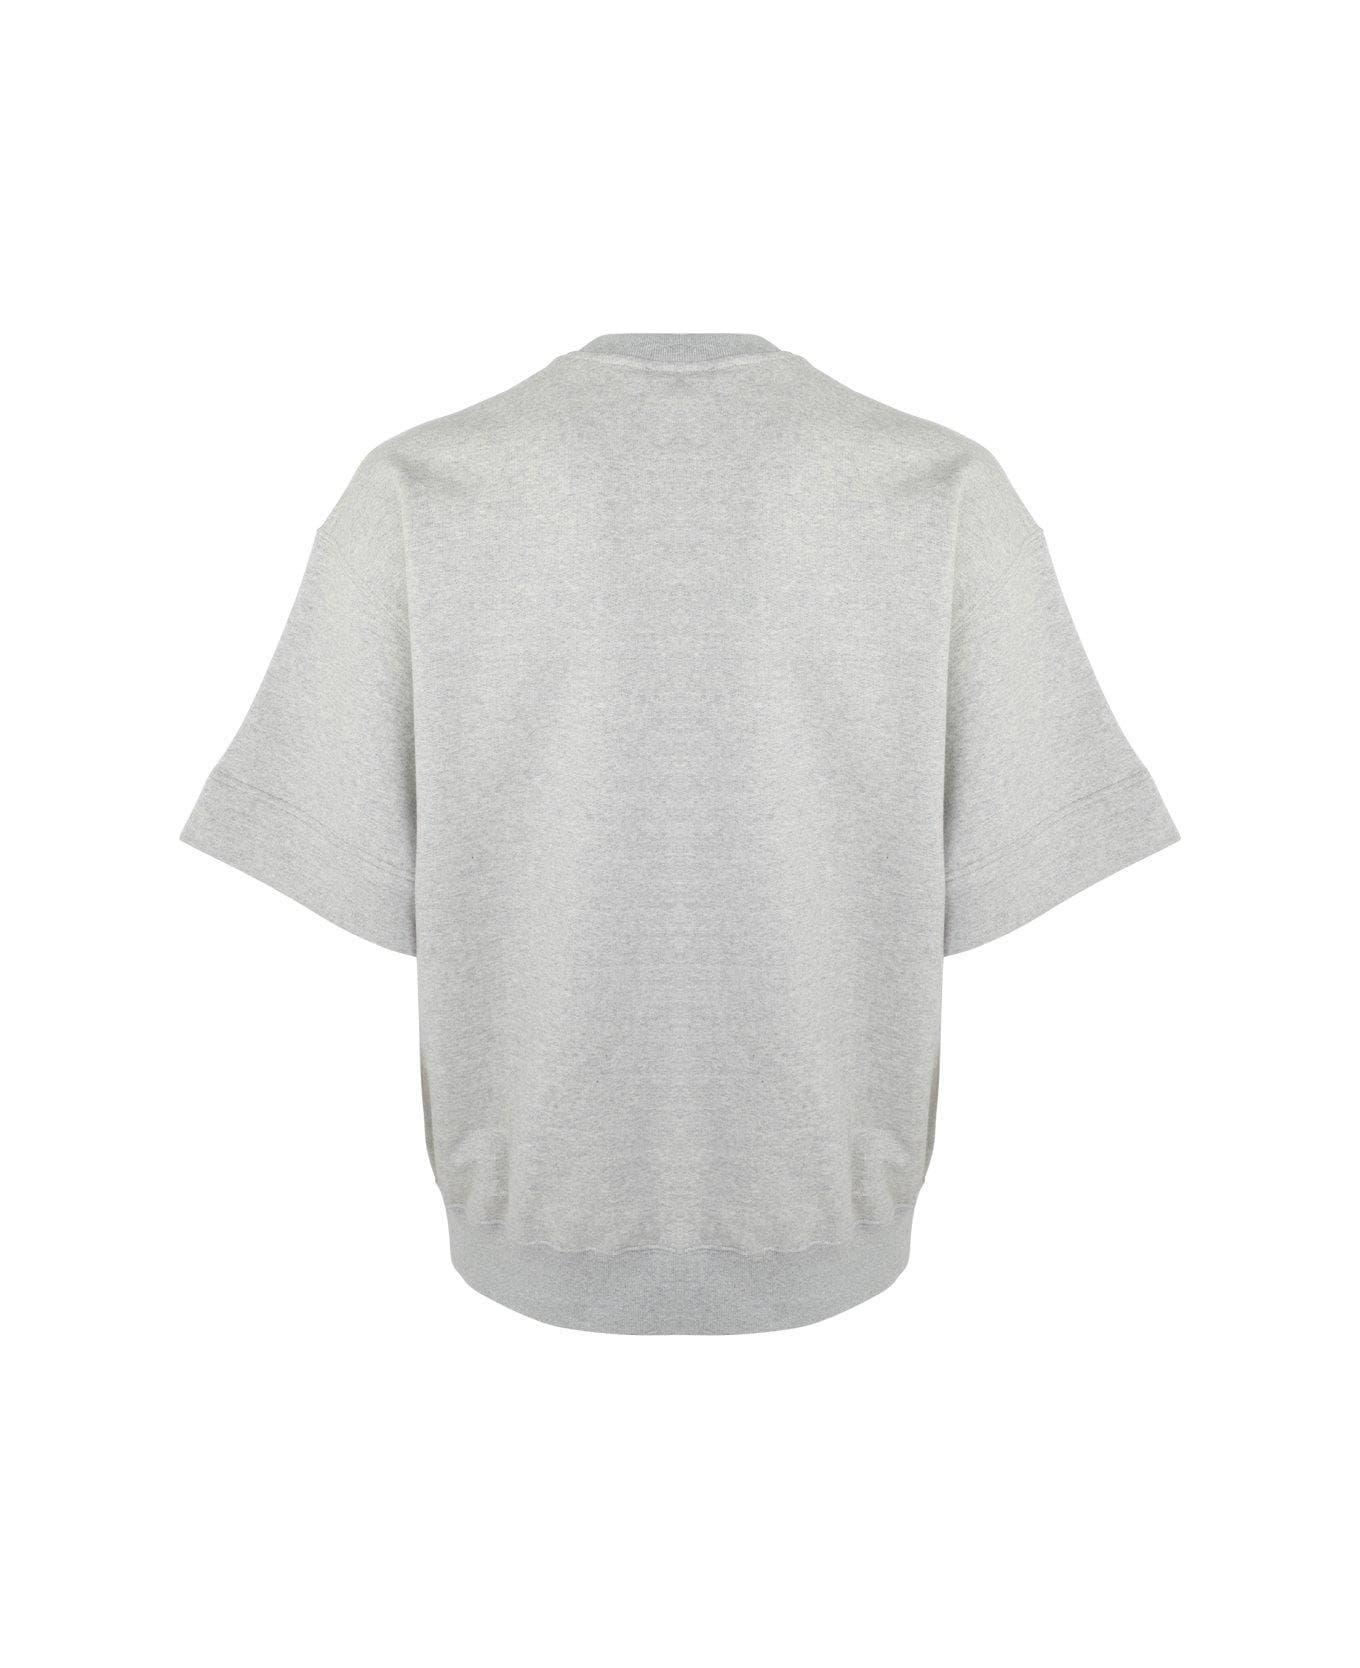 Jil Sander + Logo Patch Short-sleeved T-shirt シャツ